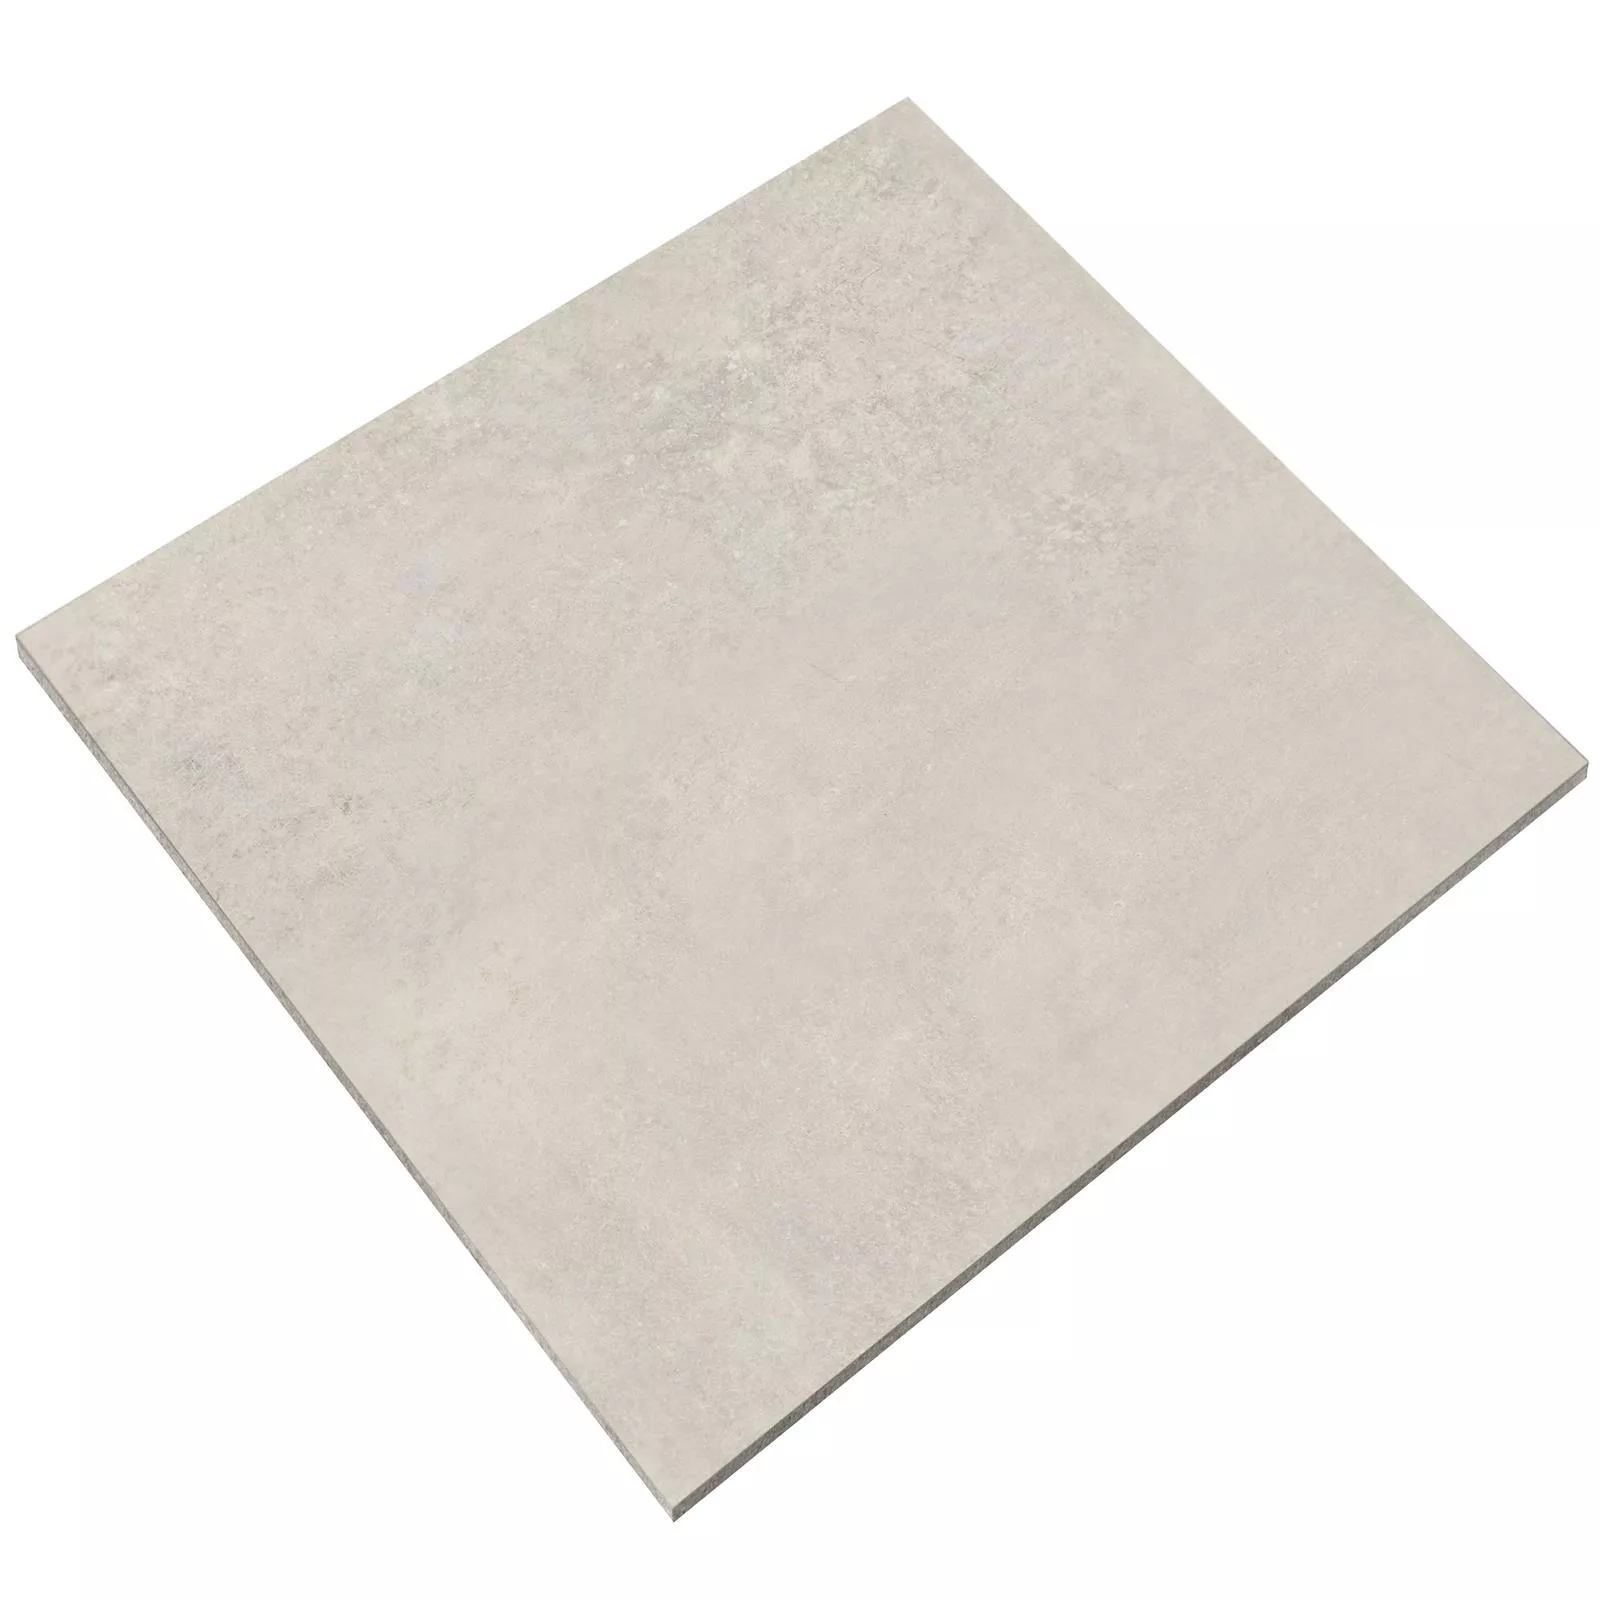 Floor Tiles Peaceway Ivory 60x60cm